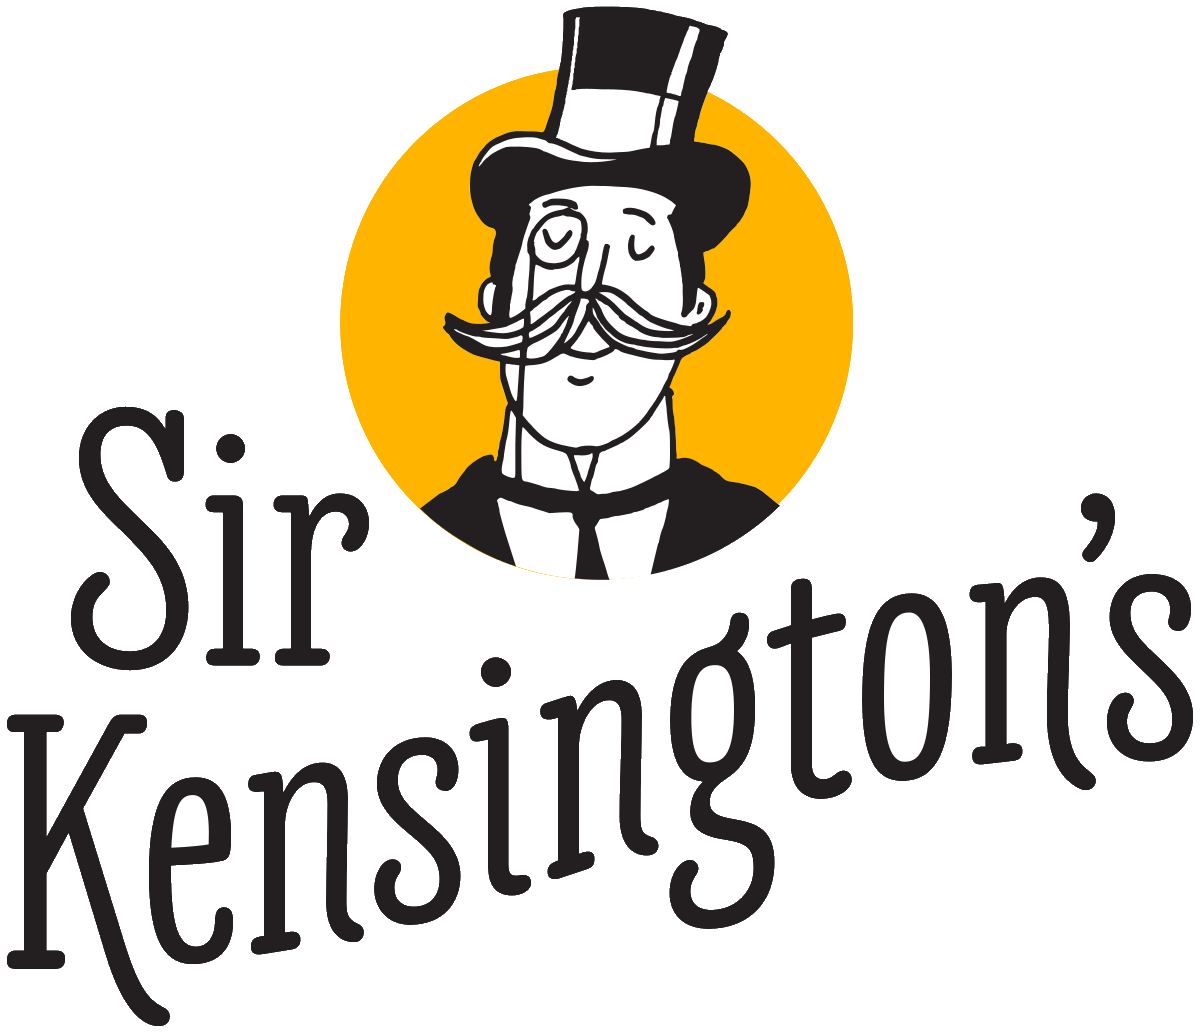 Sir Kensington's logo